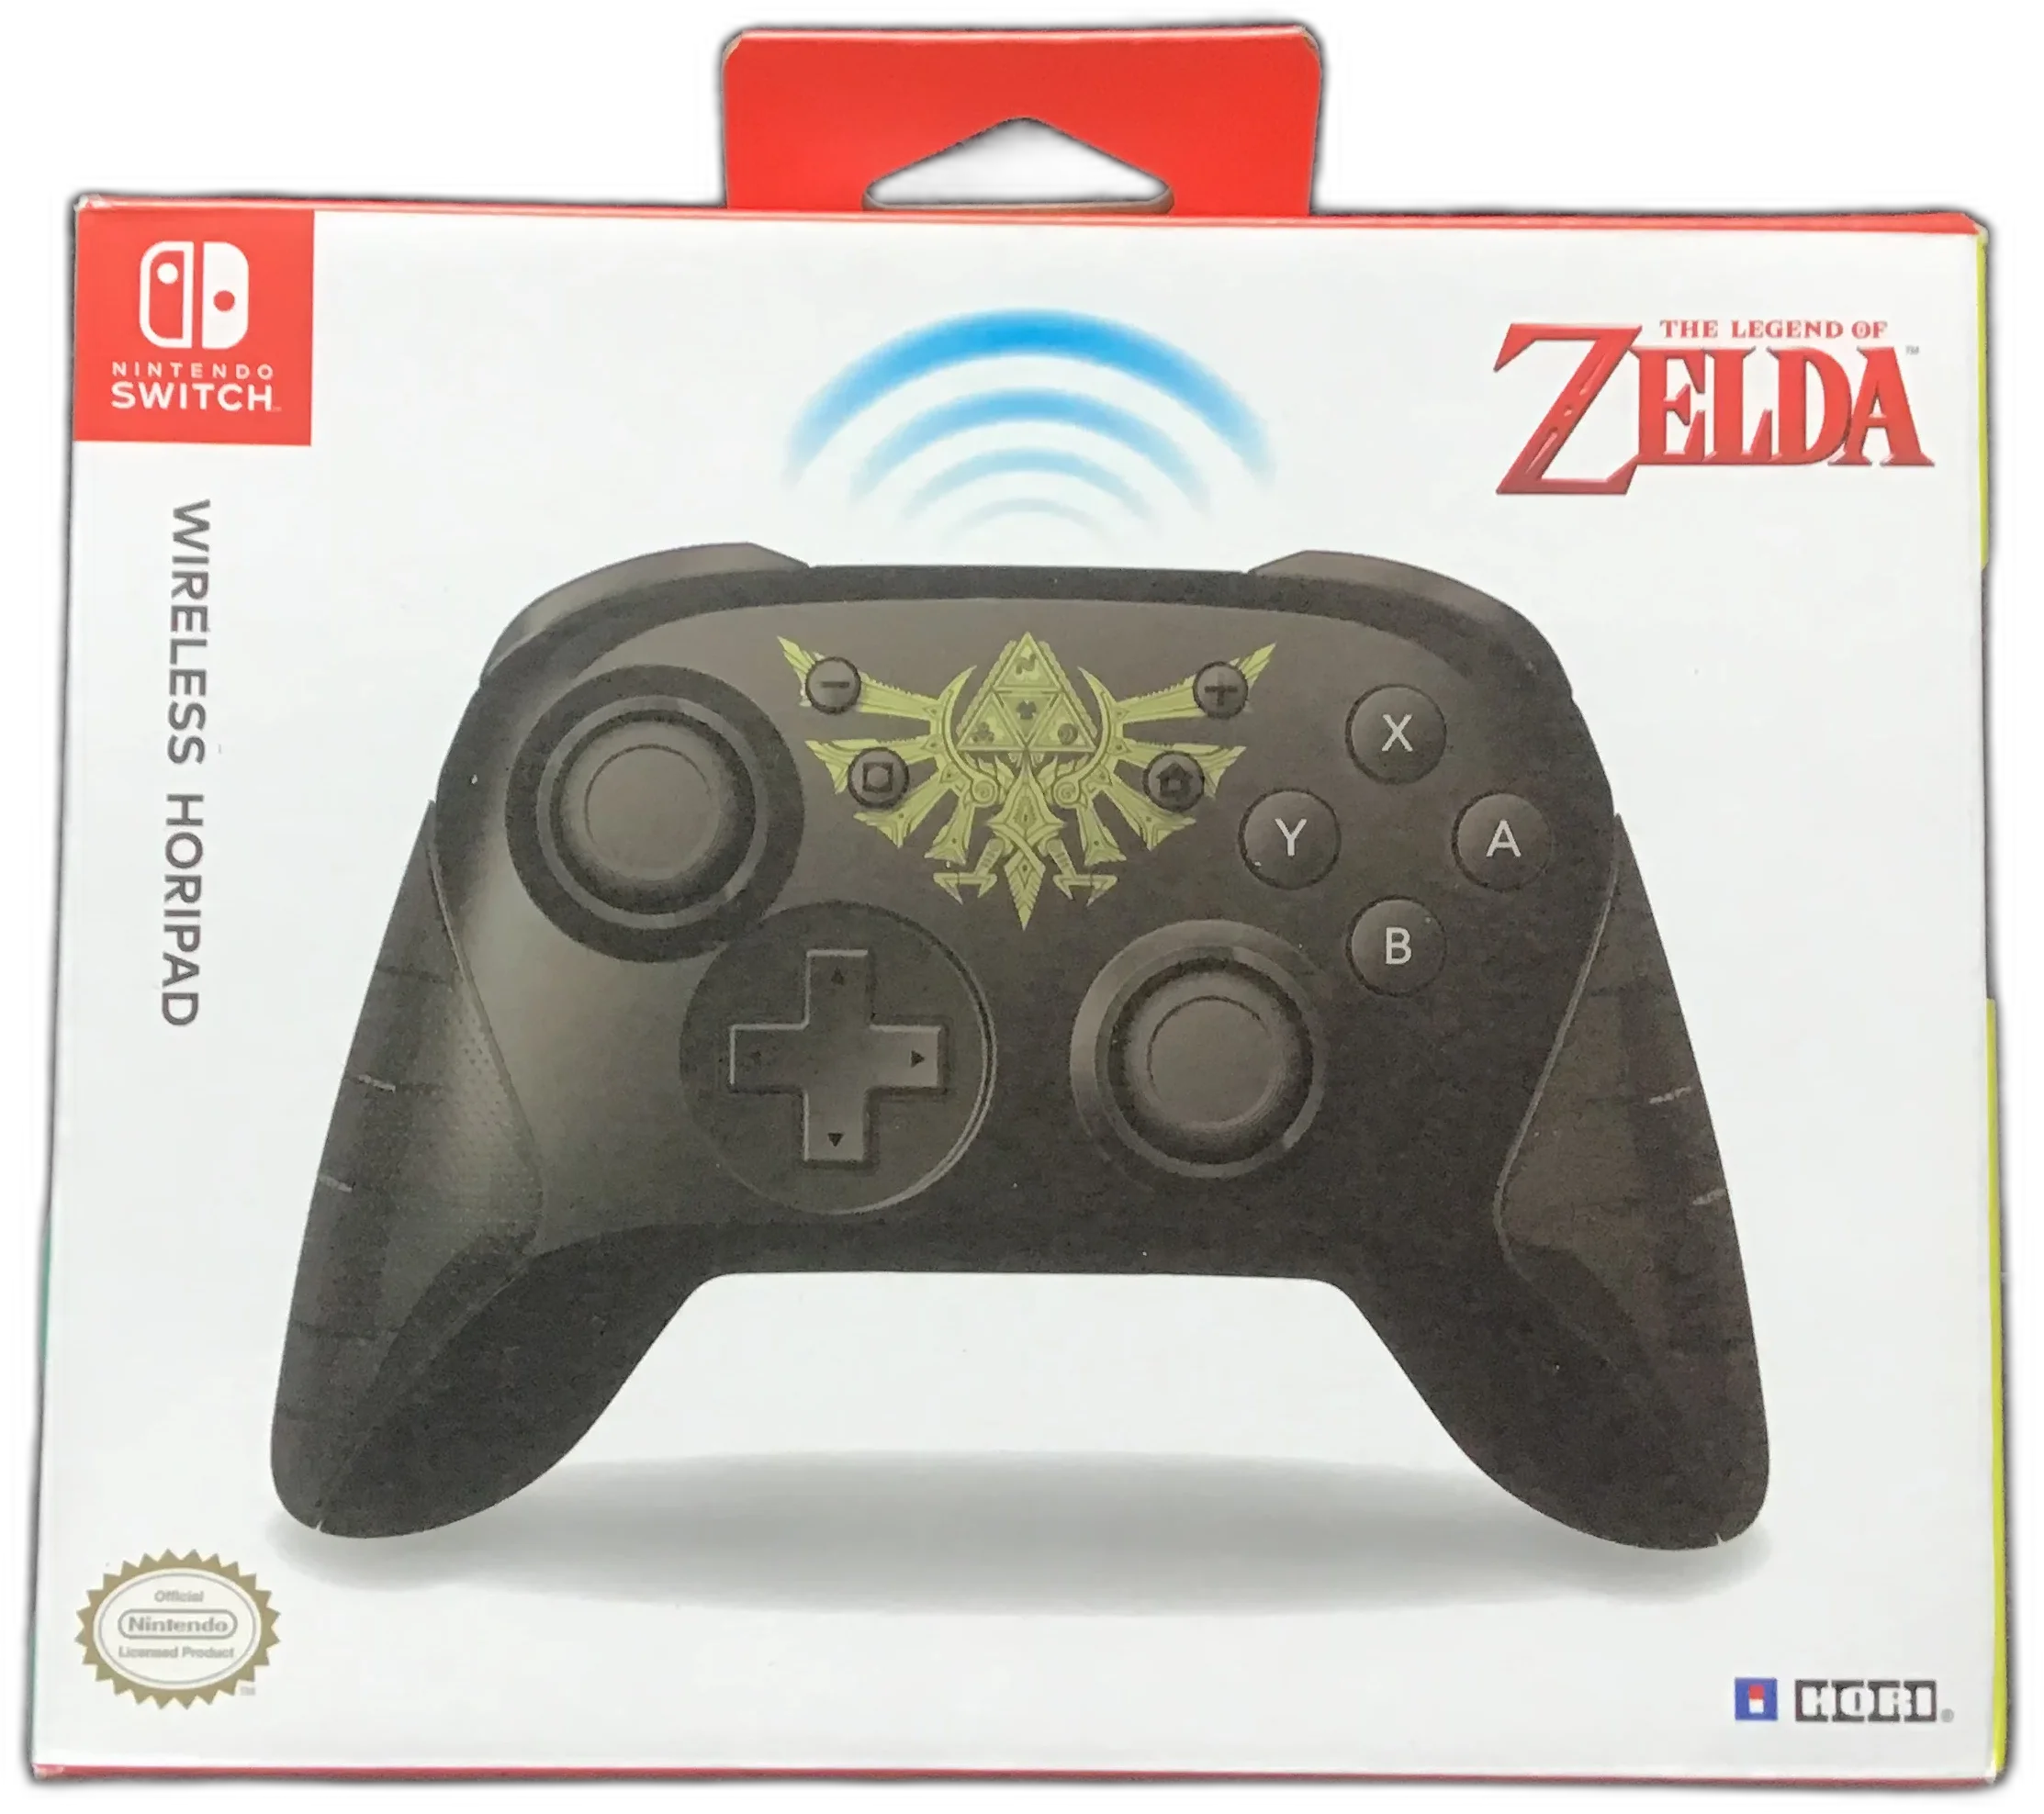  Hori Switch Zelda Wireless Controller [EU/USA]